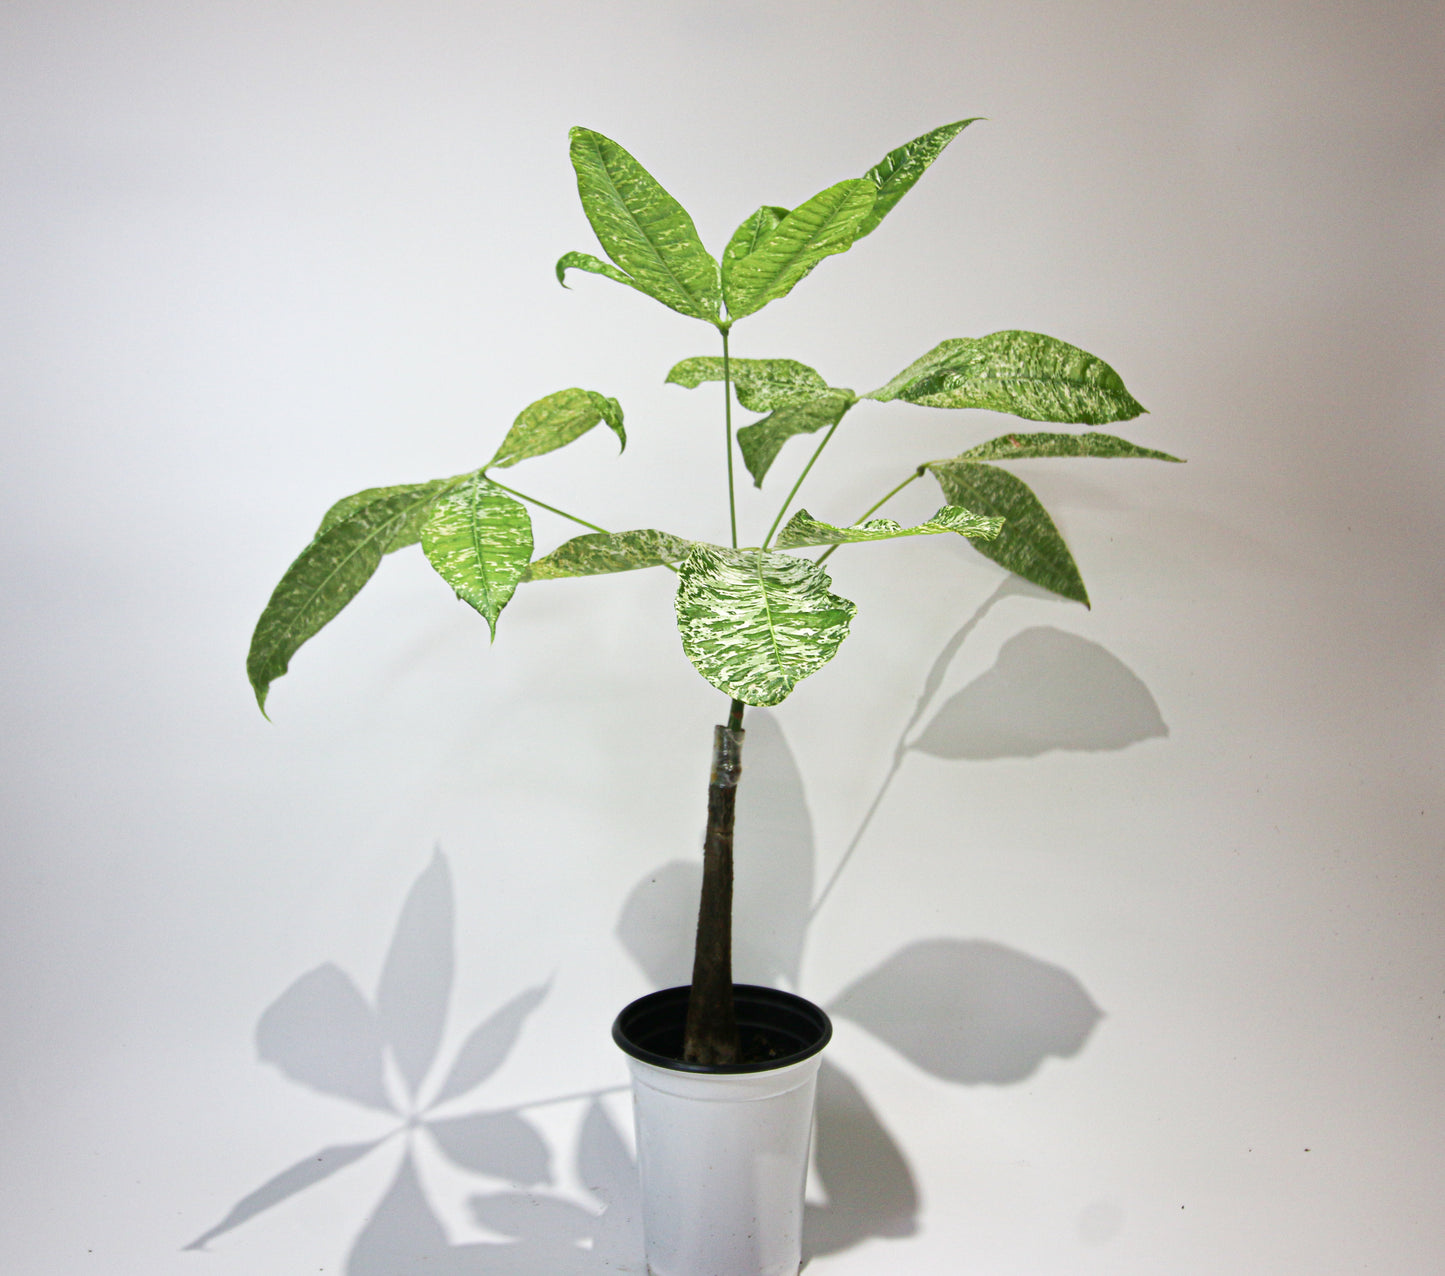 Pachira aquatica variegata (Variegated Money Tree)